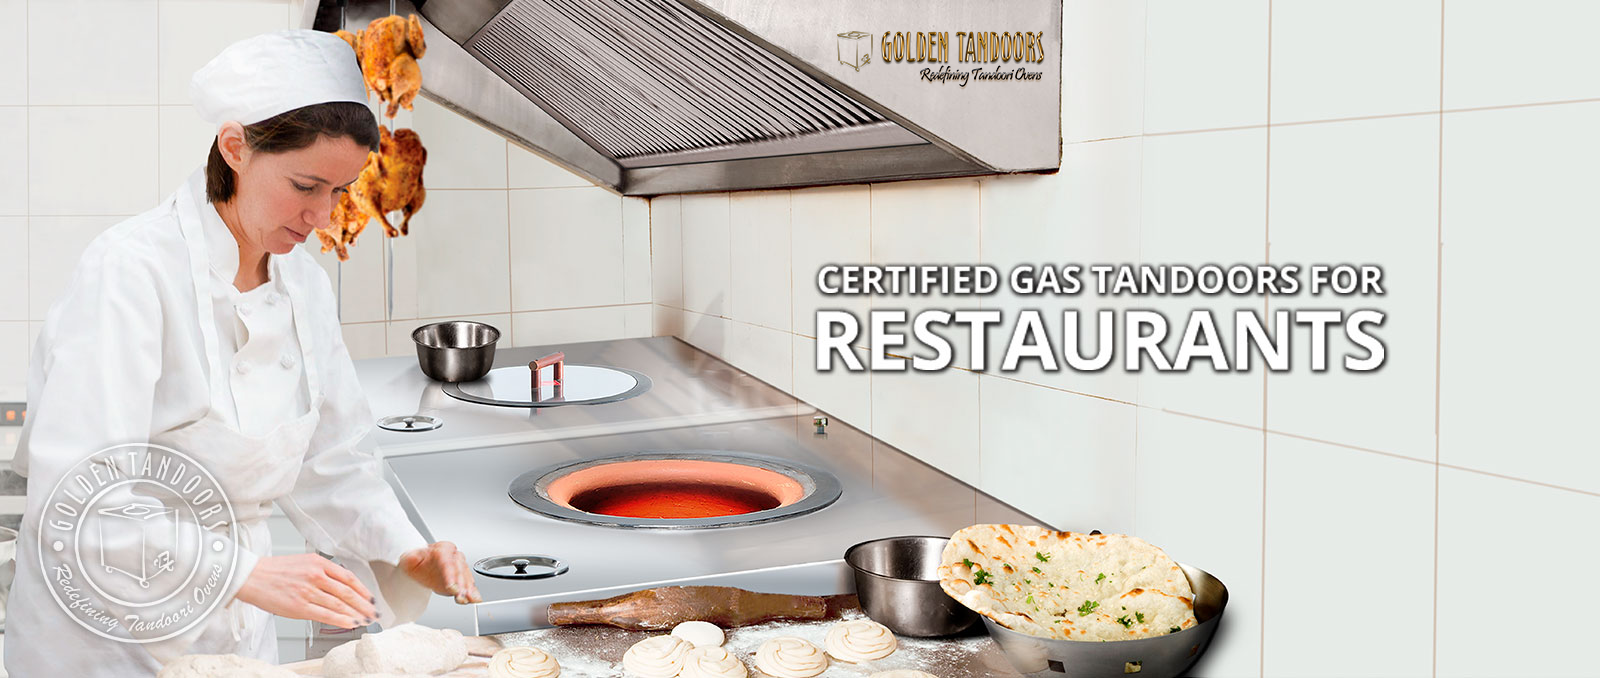 Certified gas tandoors for restaurant